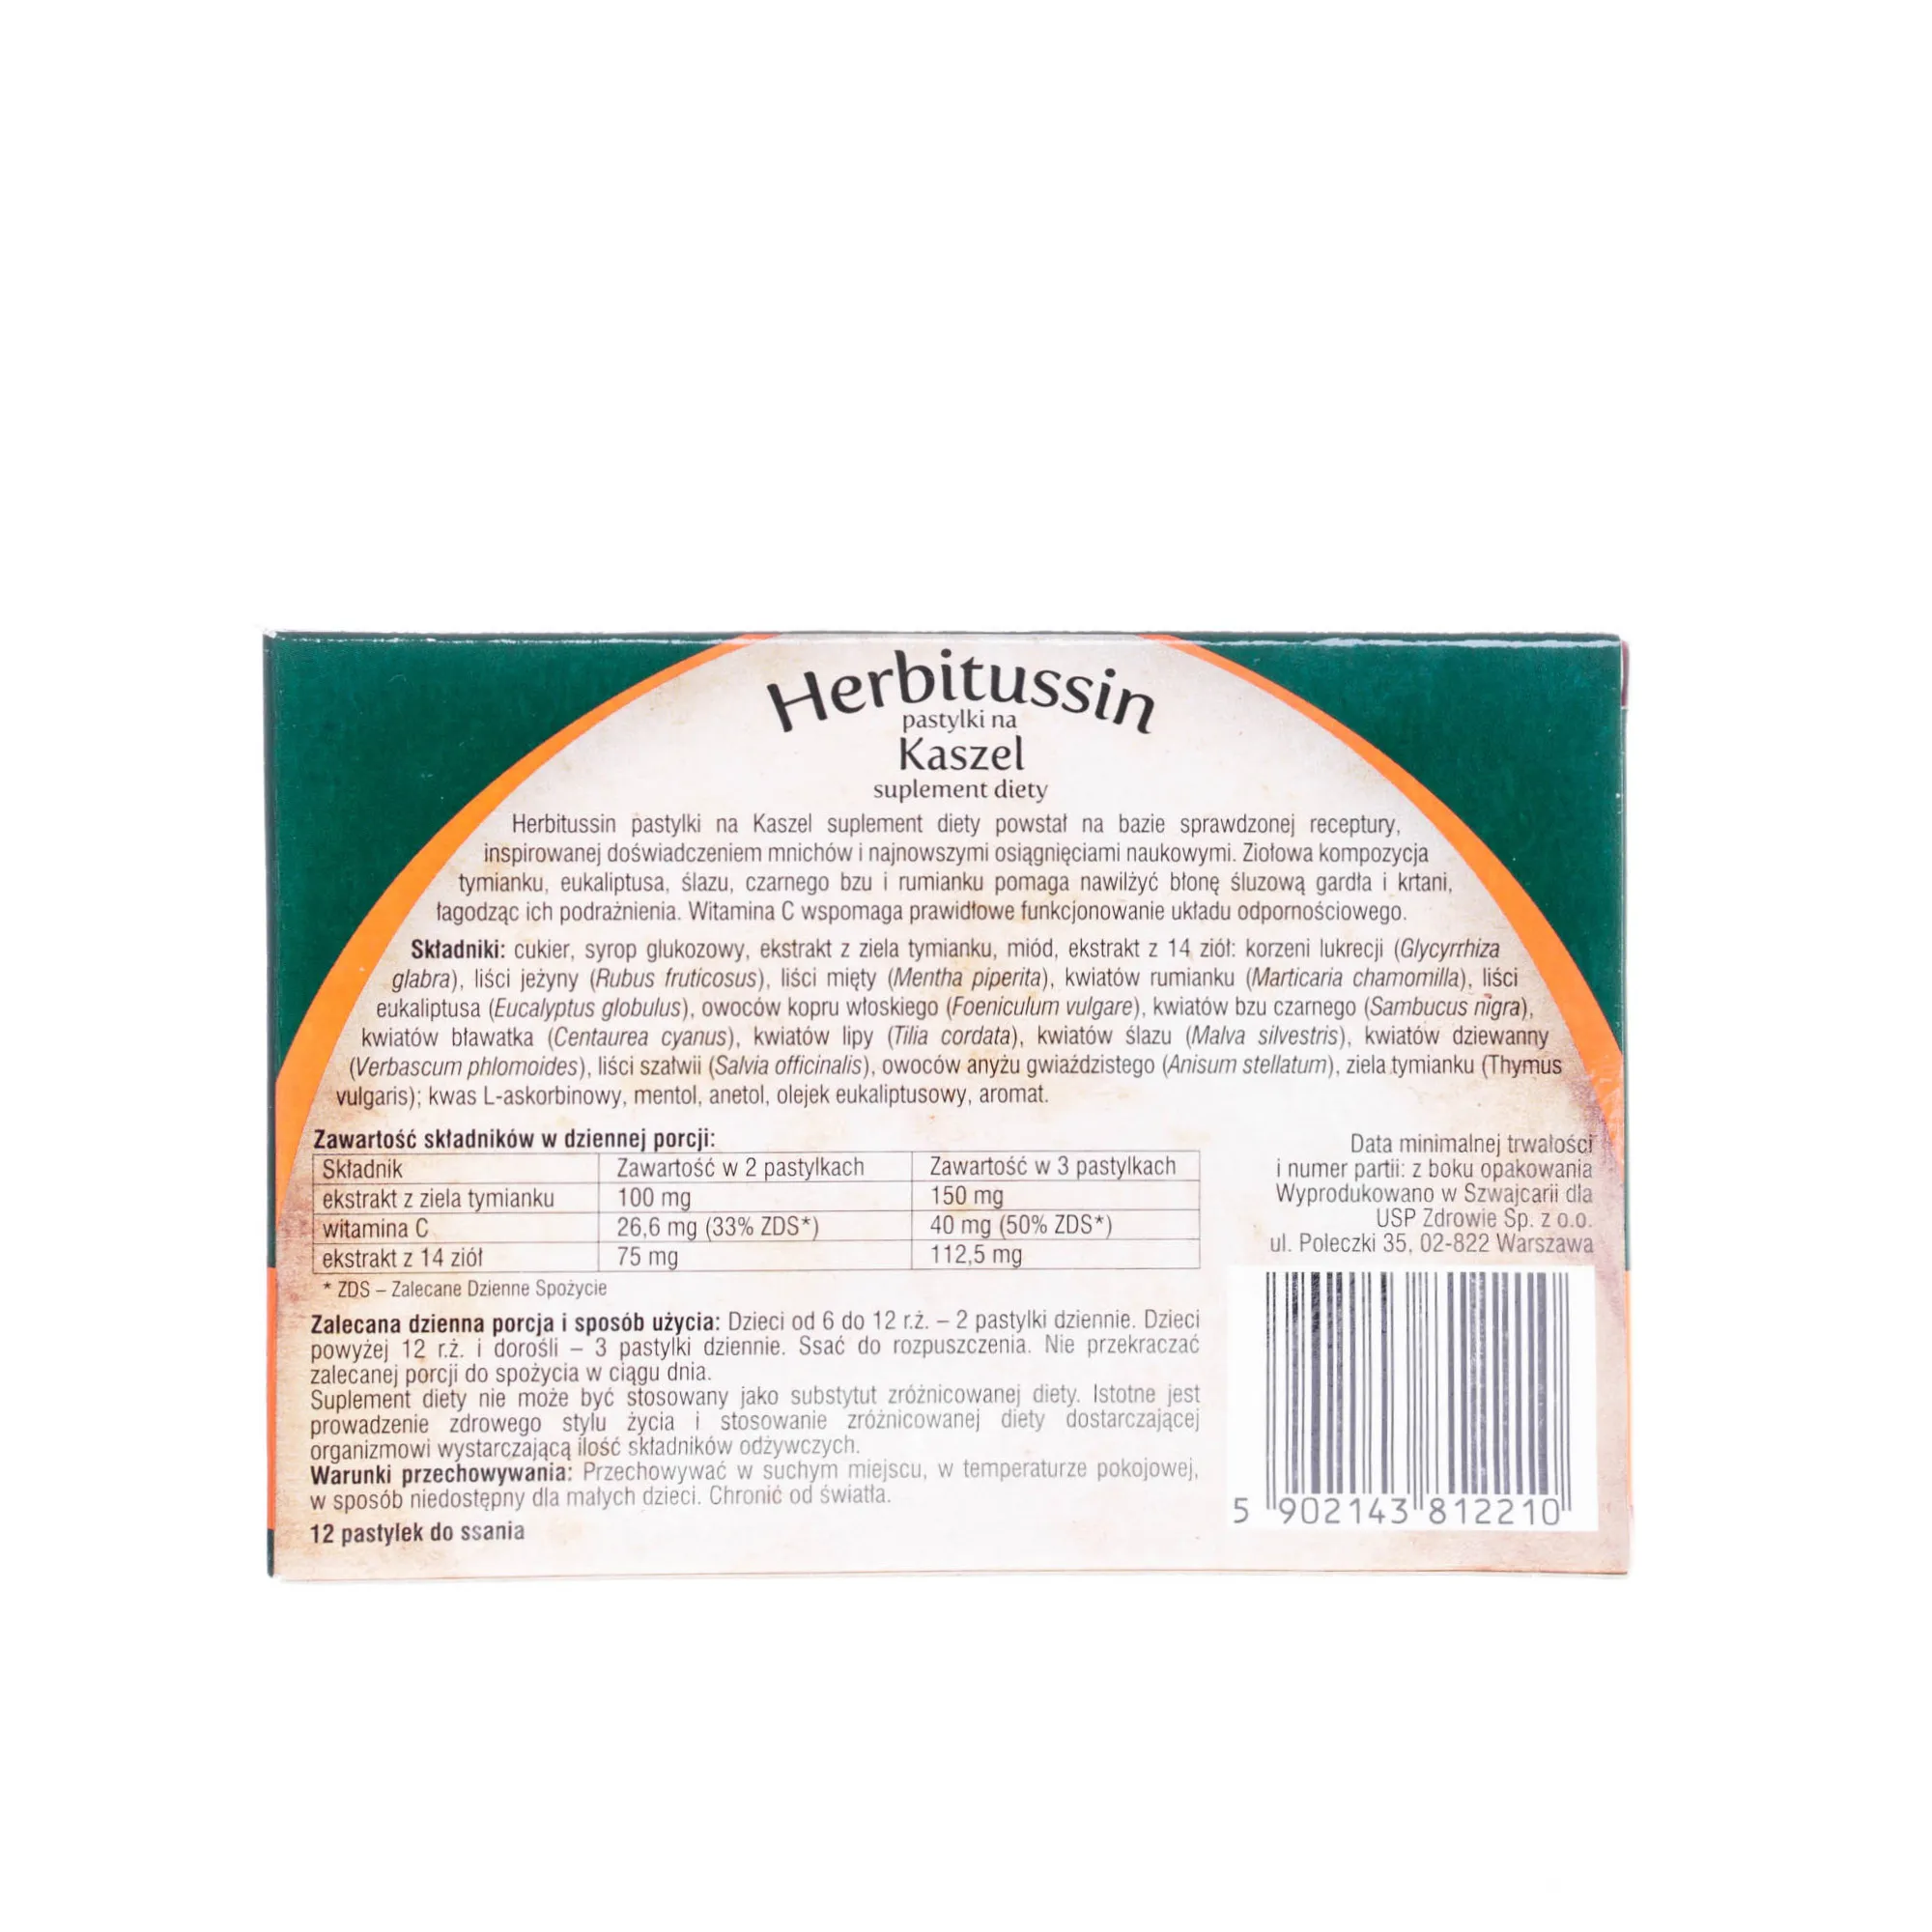 Herbitussin - pastylki do ssania na kaszel, 12 szt. 